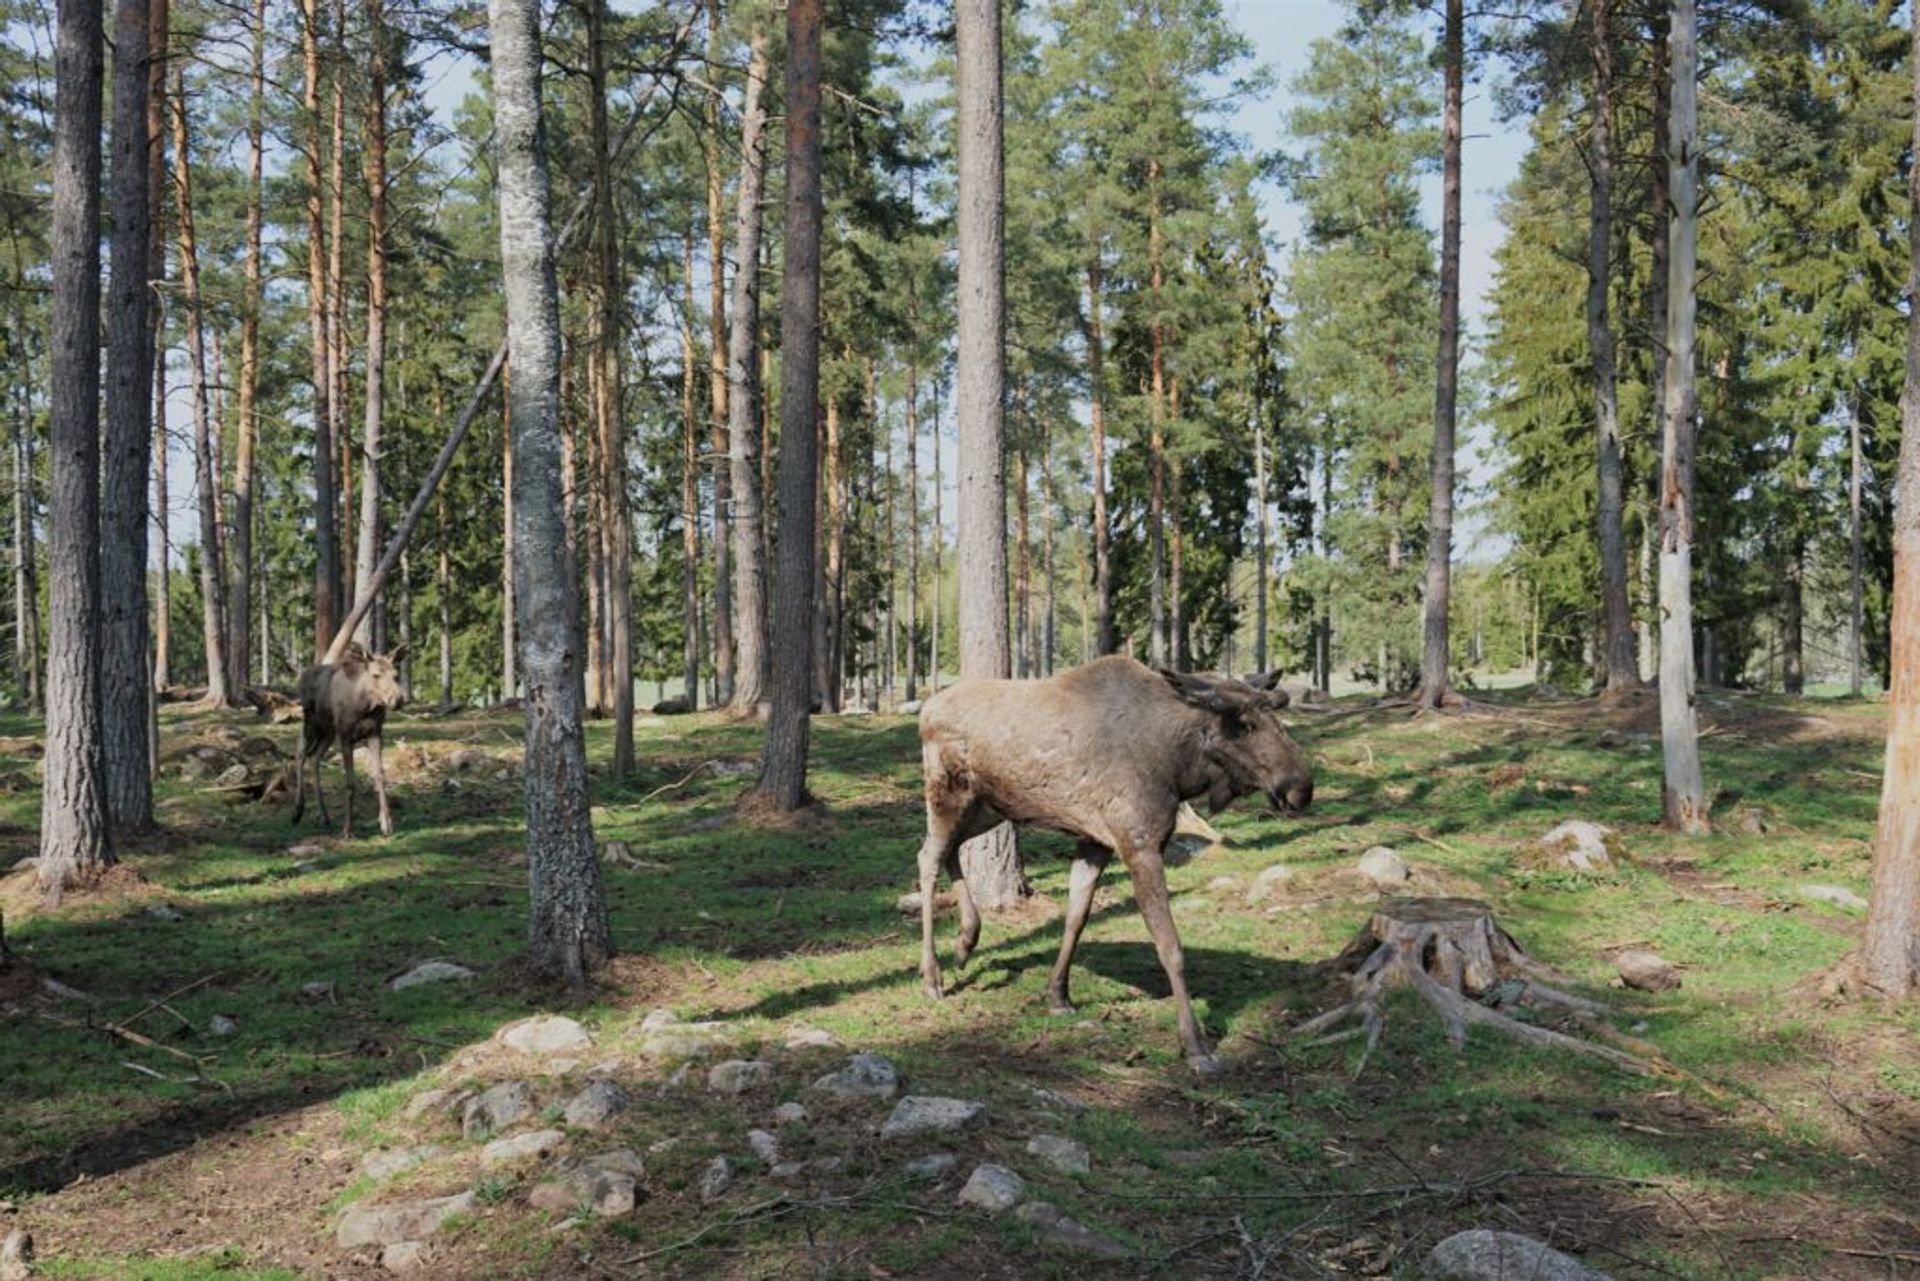 Moose walking in a forest.